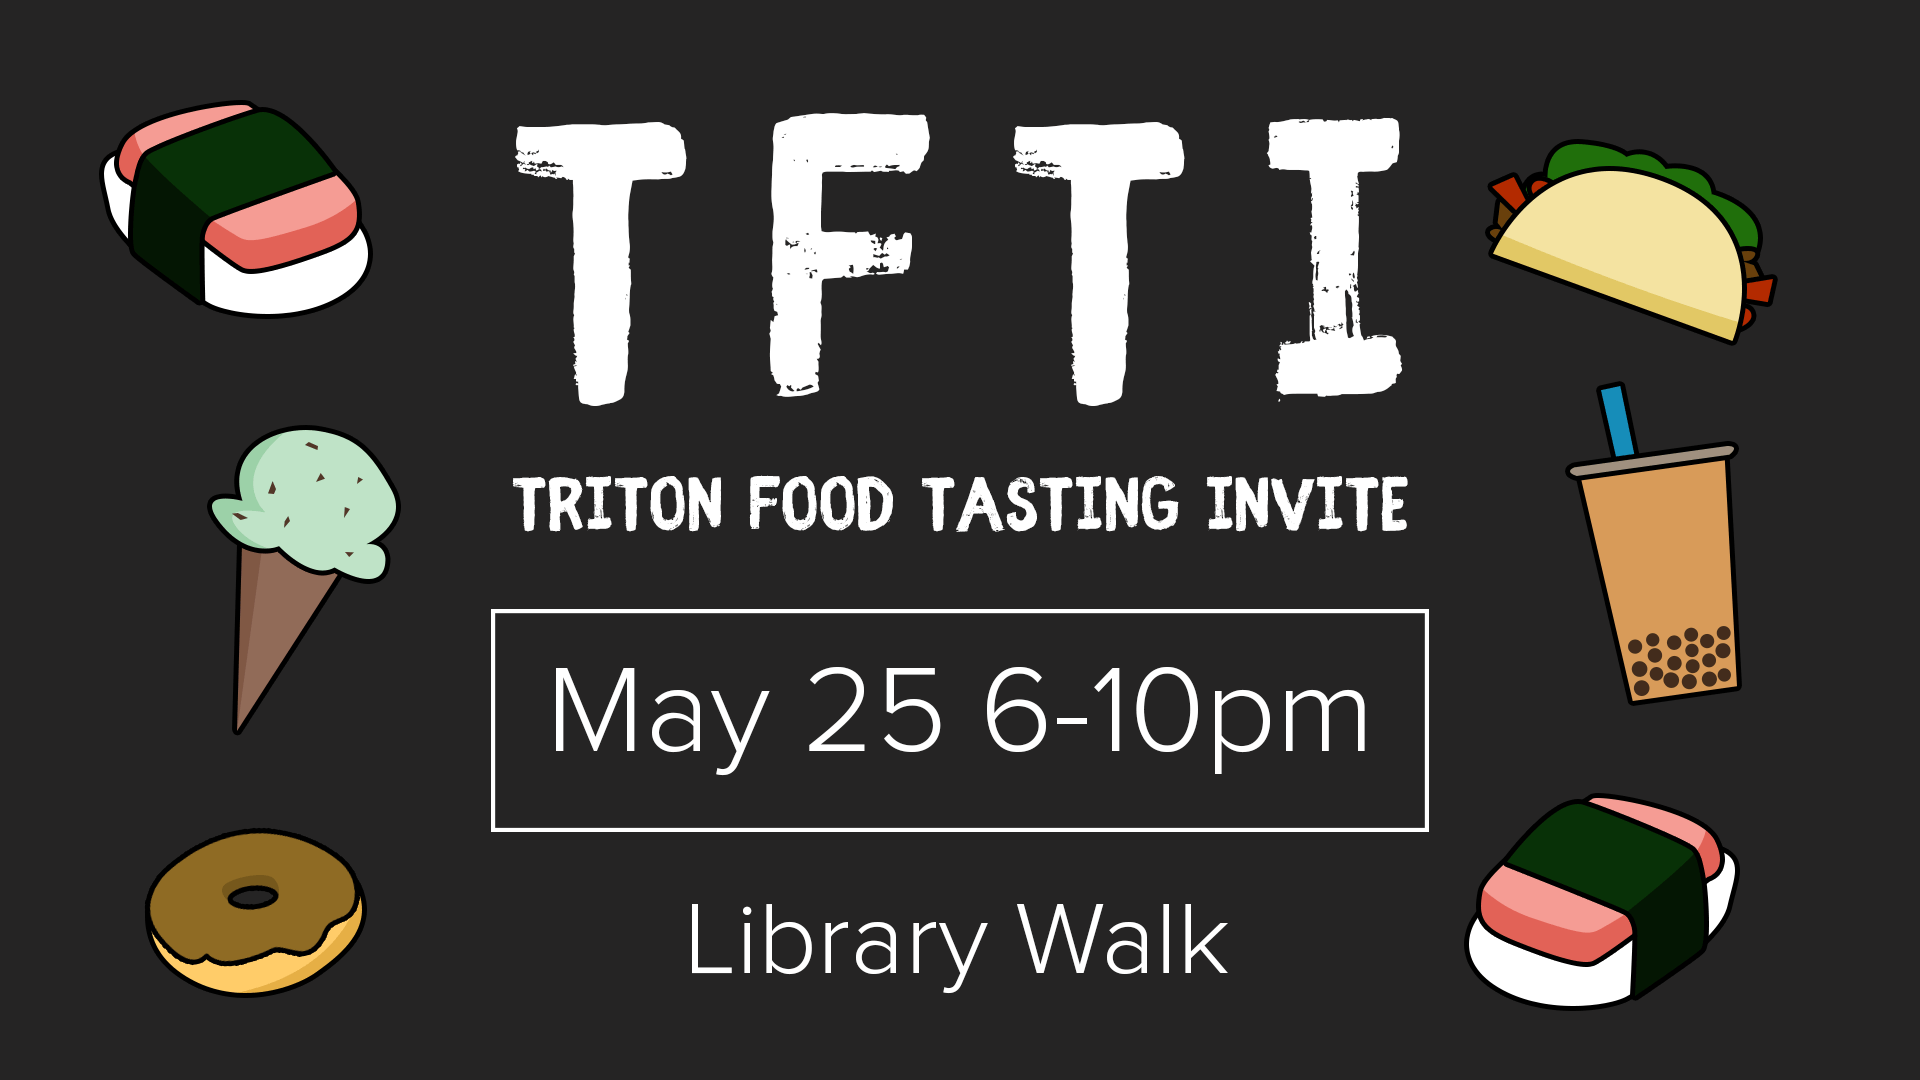 Triton Food Tasting Invite Flyer